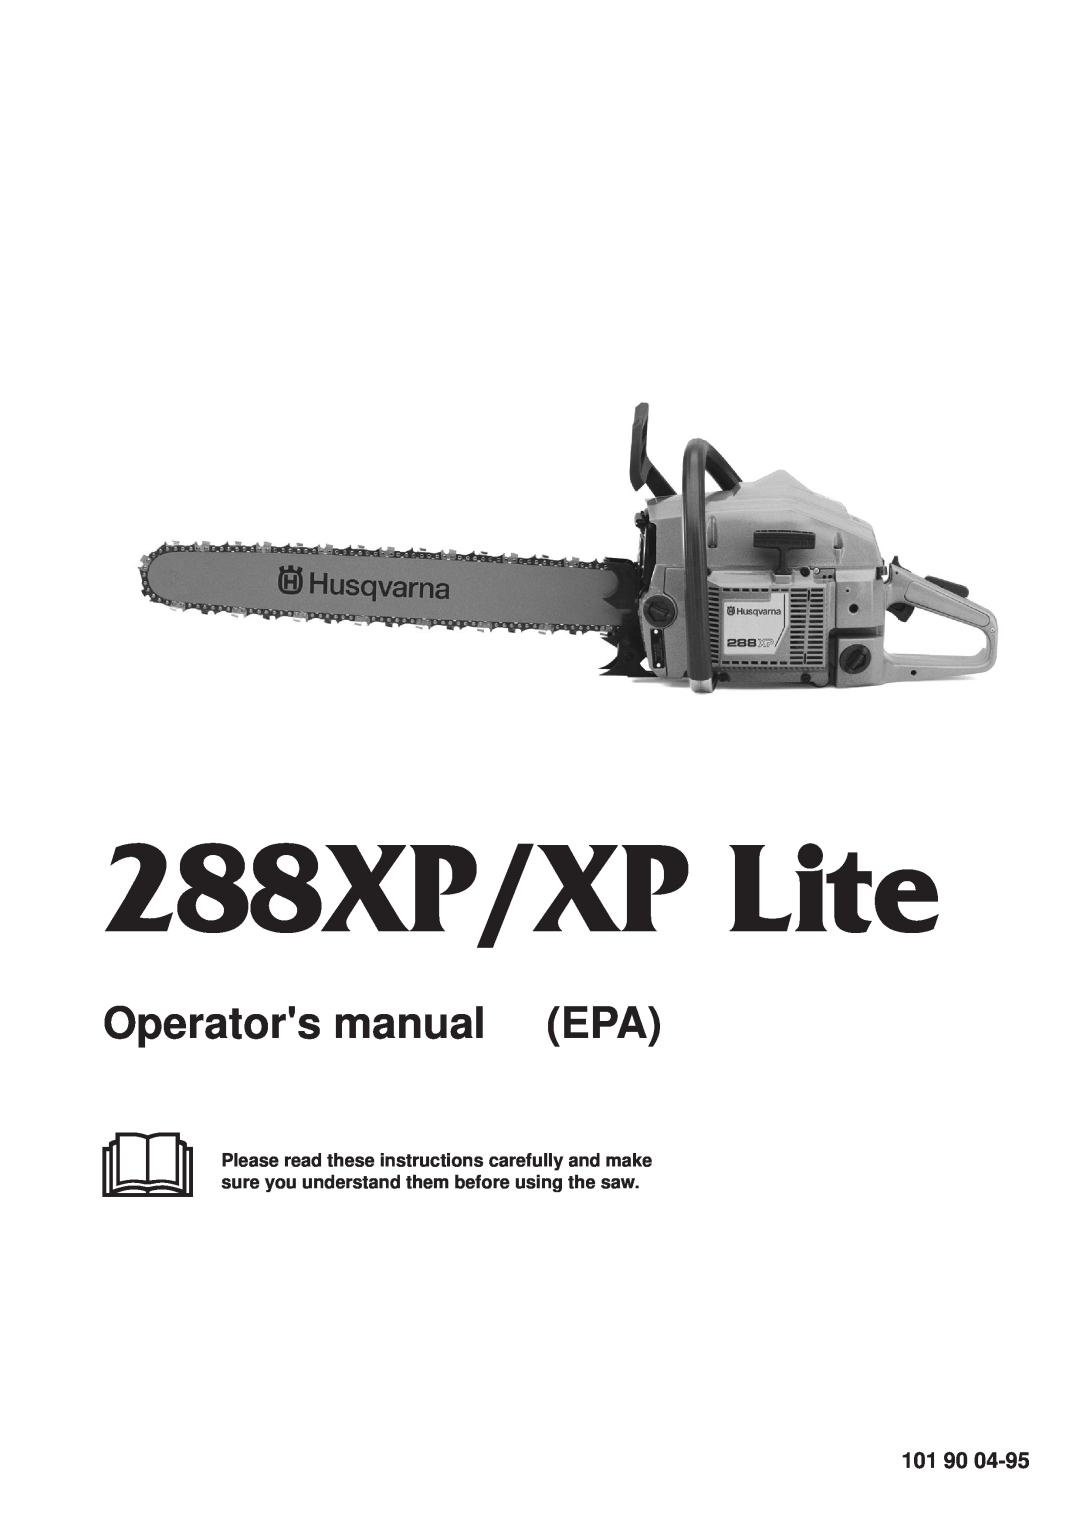 Husqvarna 281XP, 288XP, 288XP, 288XP Lite manual 288XP/XP Lite, Operators manual EPA, 101 